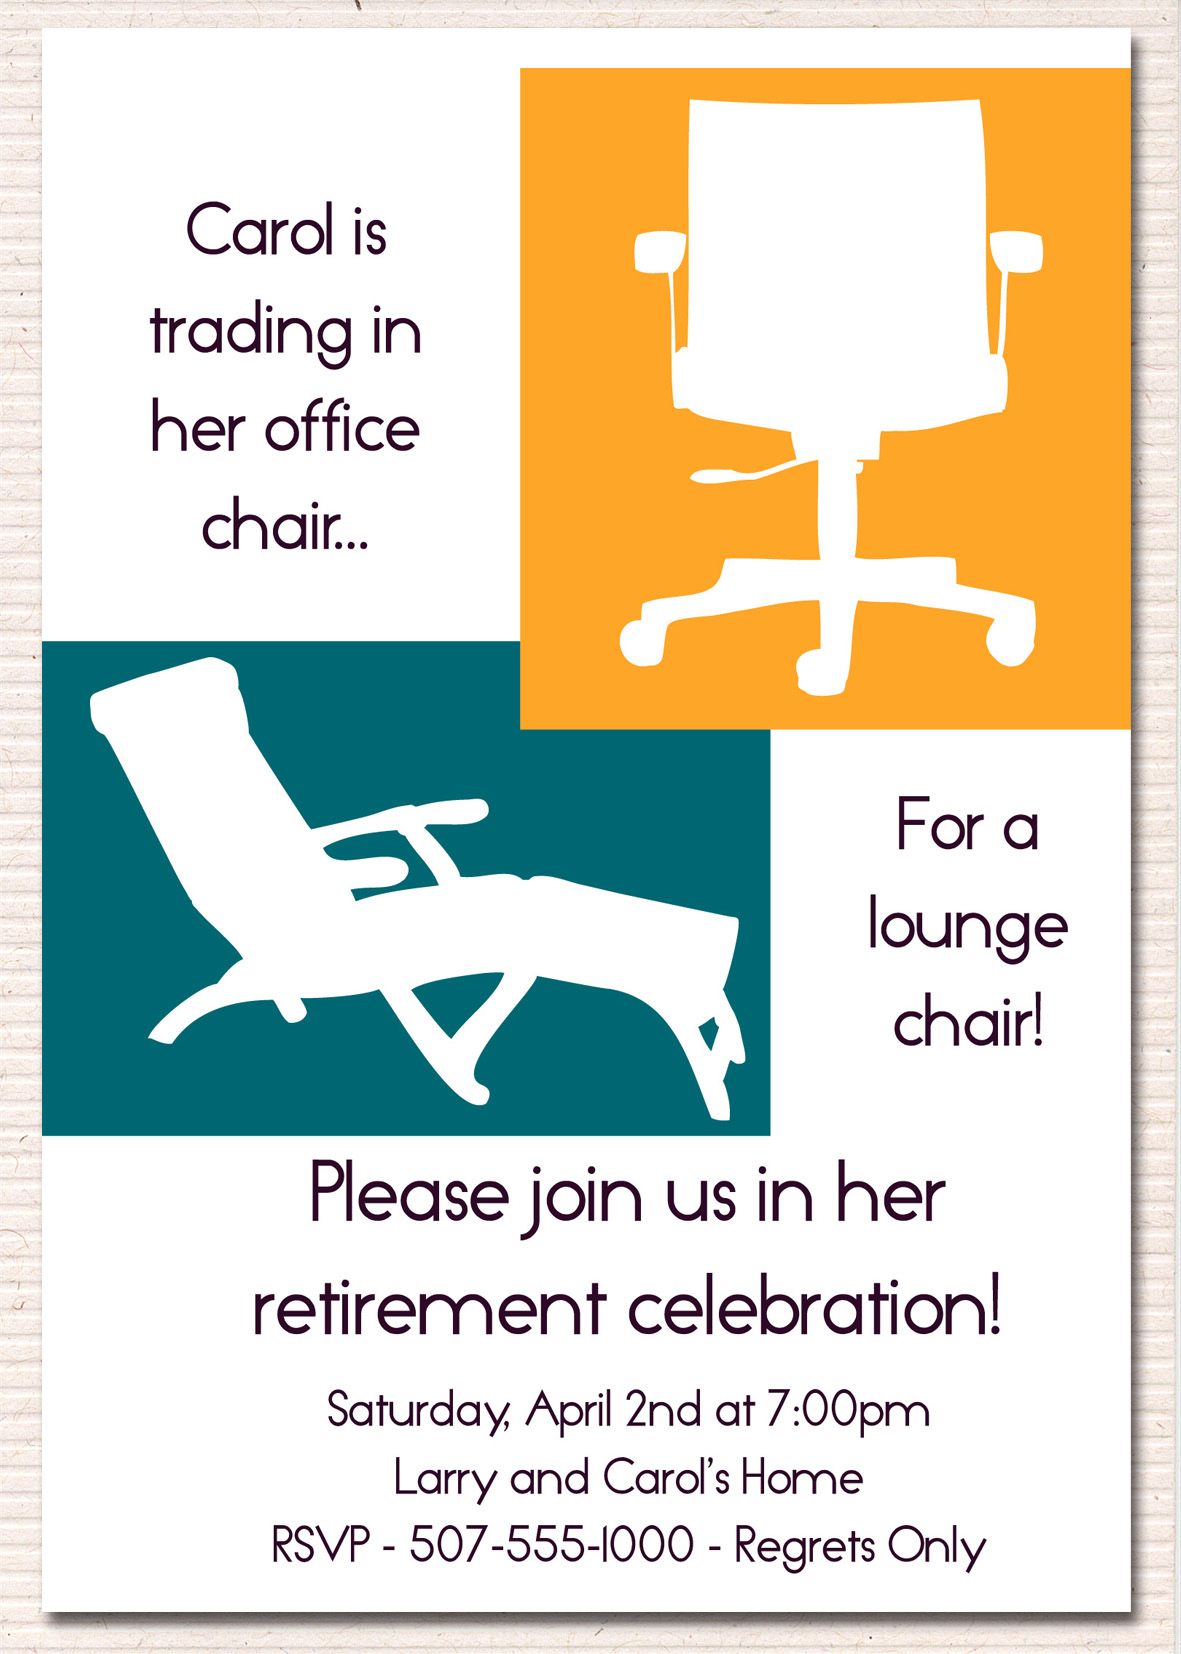 Retirement party invitation clipart 